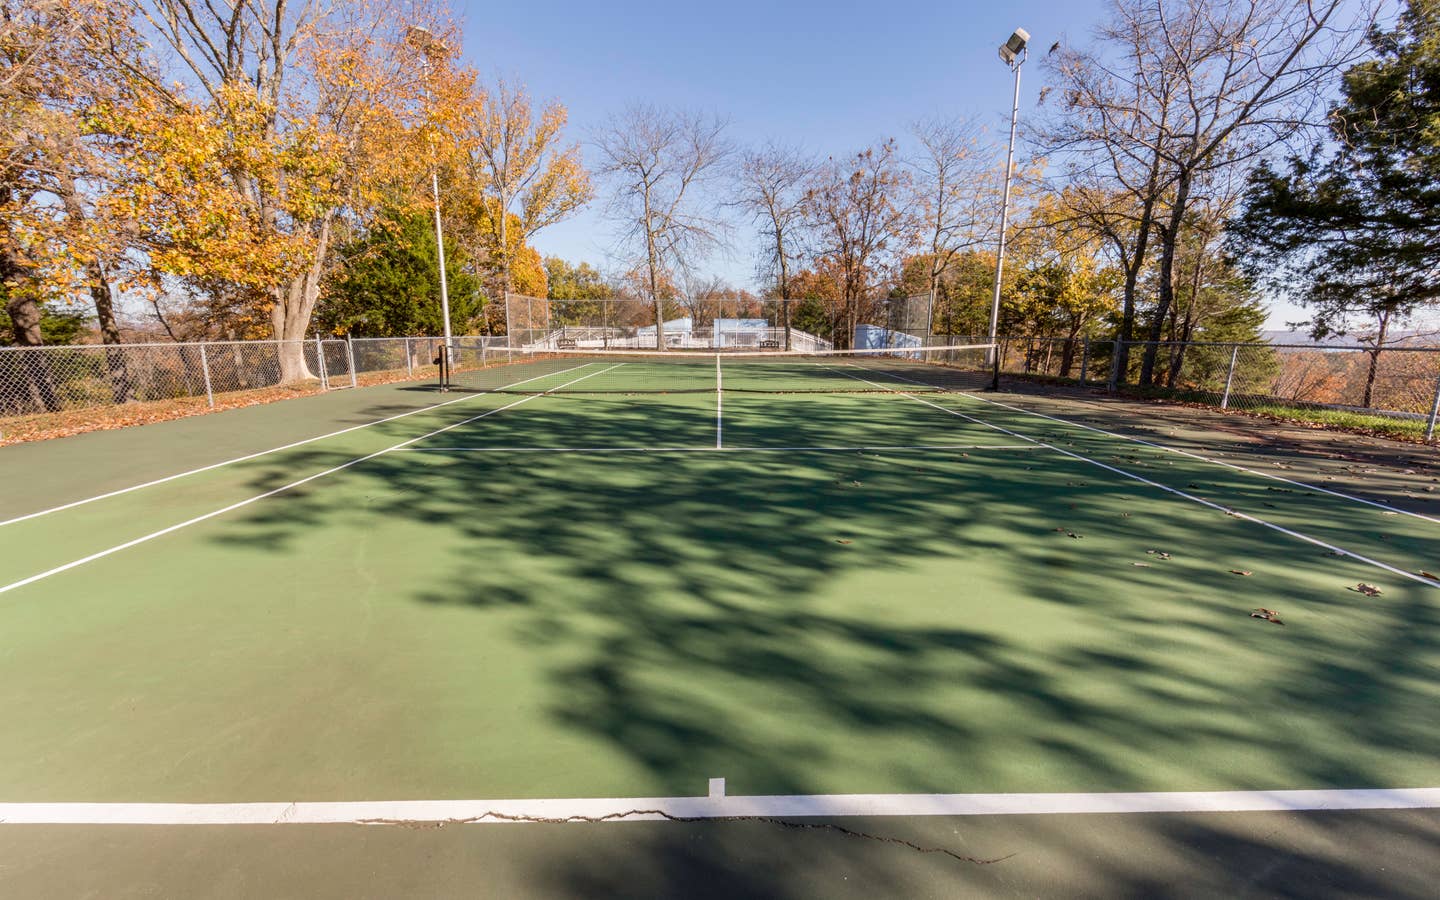 Outdoor tennis court at Ozark Mountain Resort in Kimberling City, Missouri.